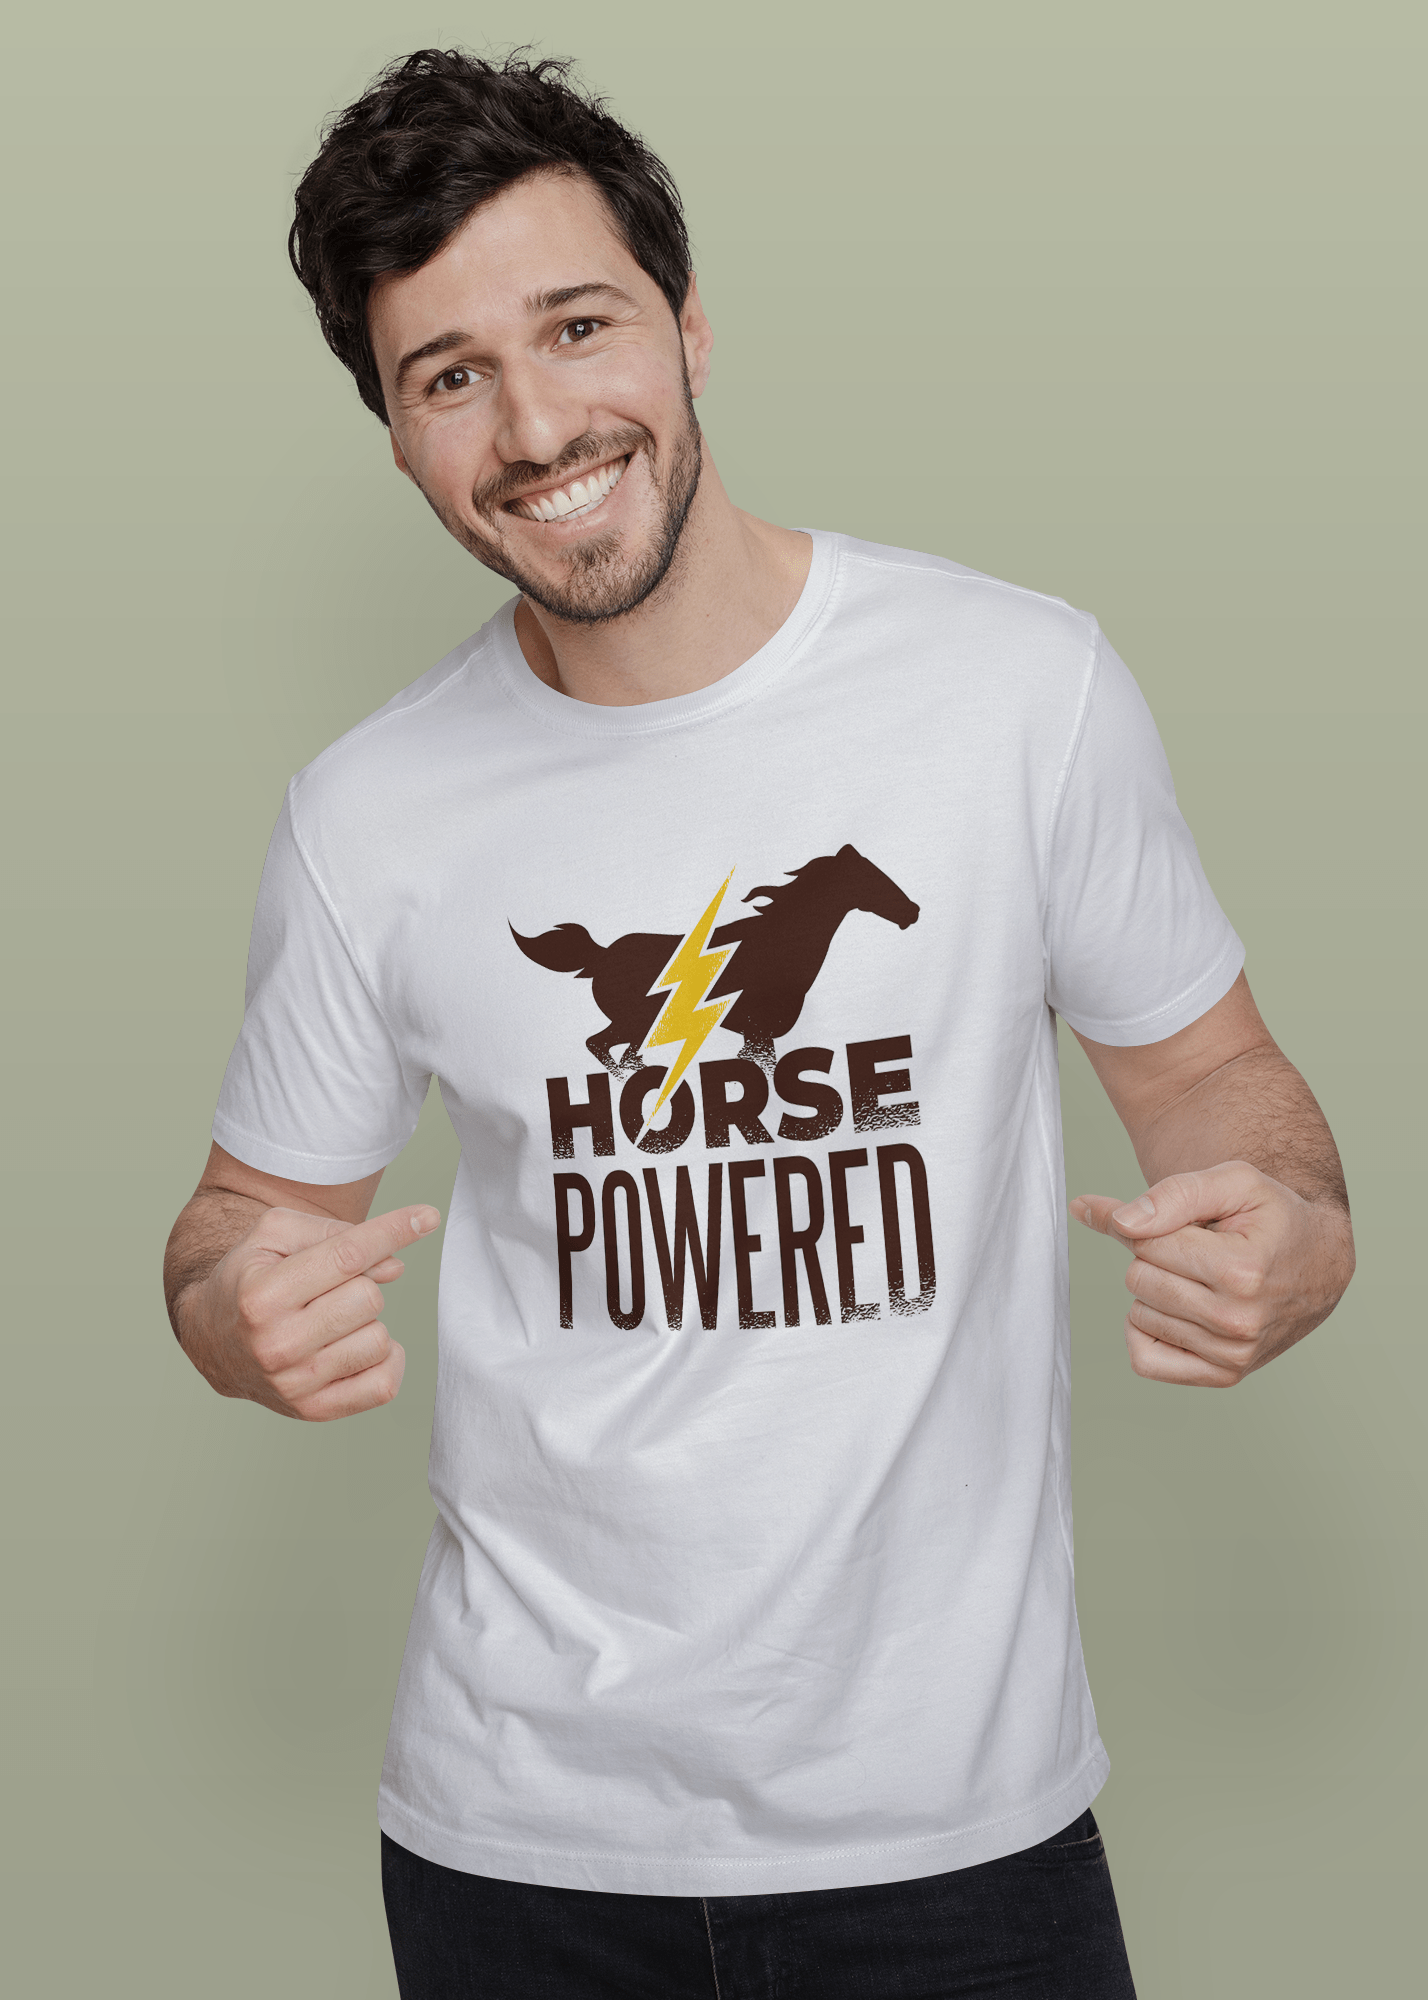 Horse Powered Printed Half Sleeve Premium Cotton T-shirt For Men